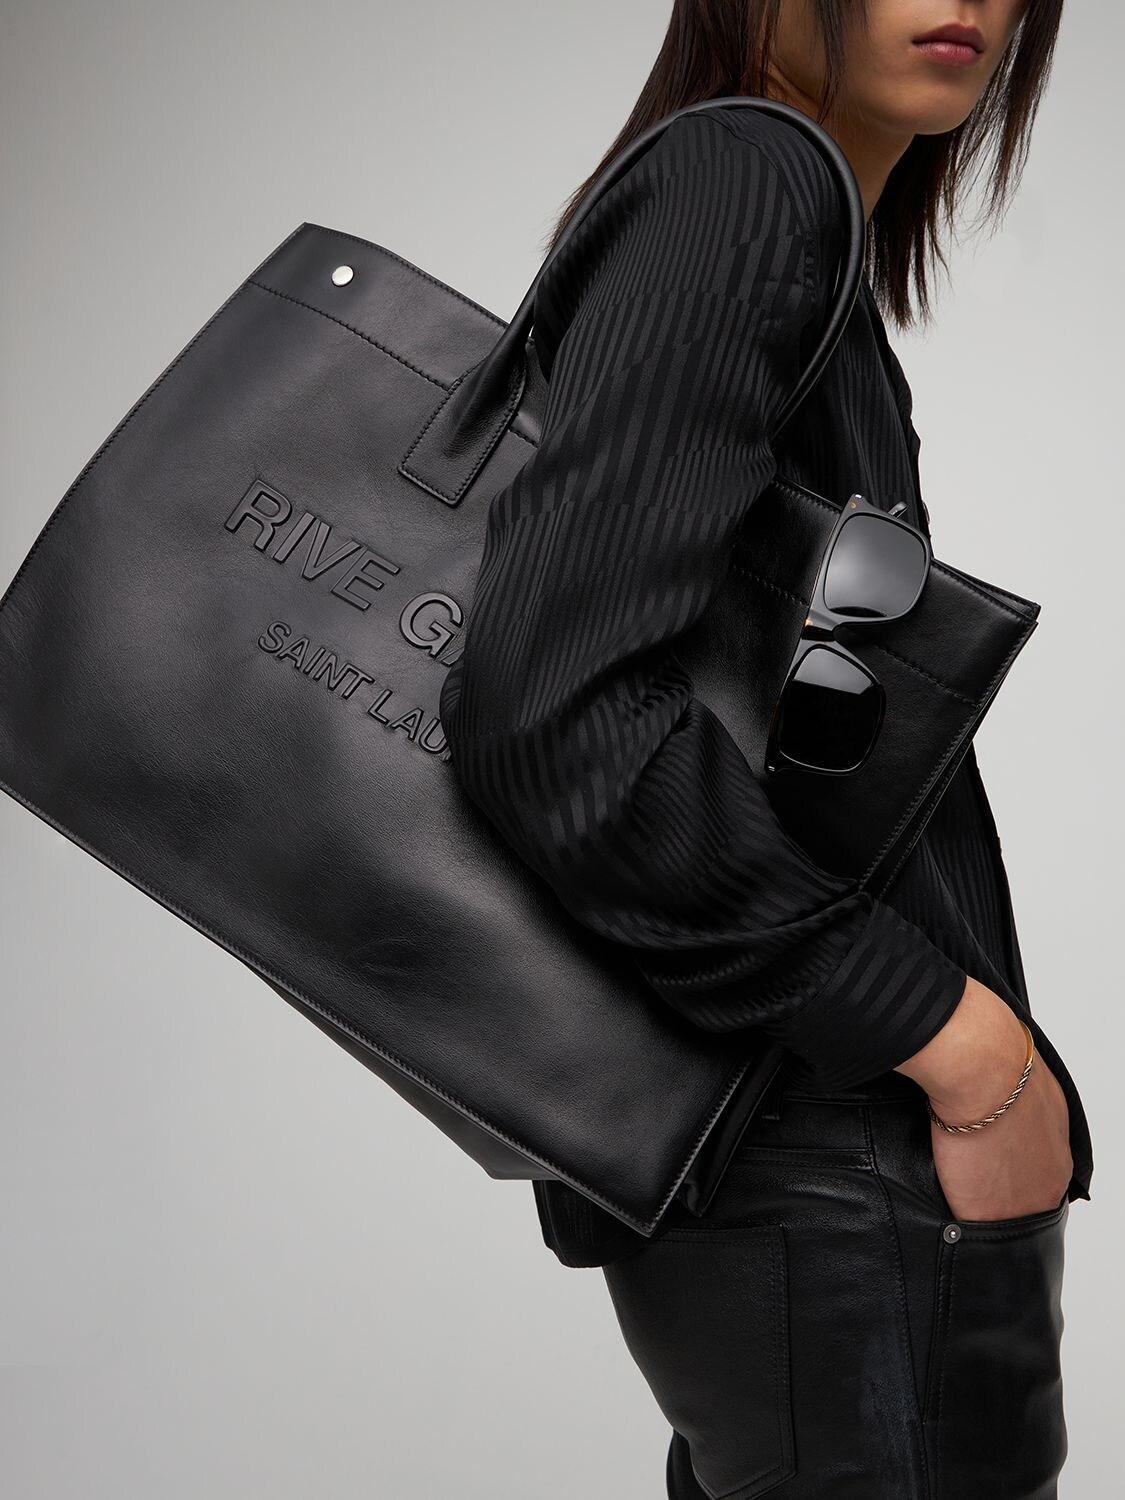 Saint Laurent Large Rive Gauche Leather Tote Bag in Black | Lyst